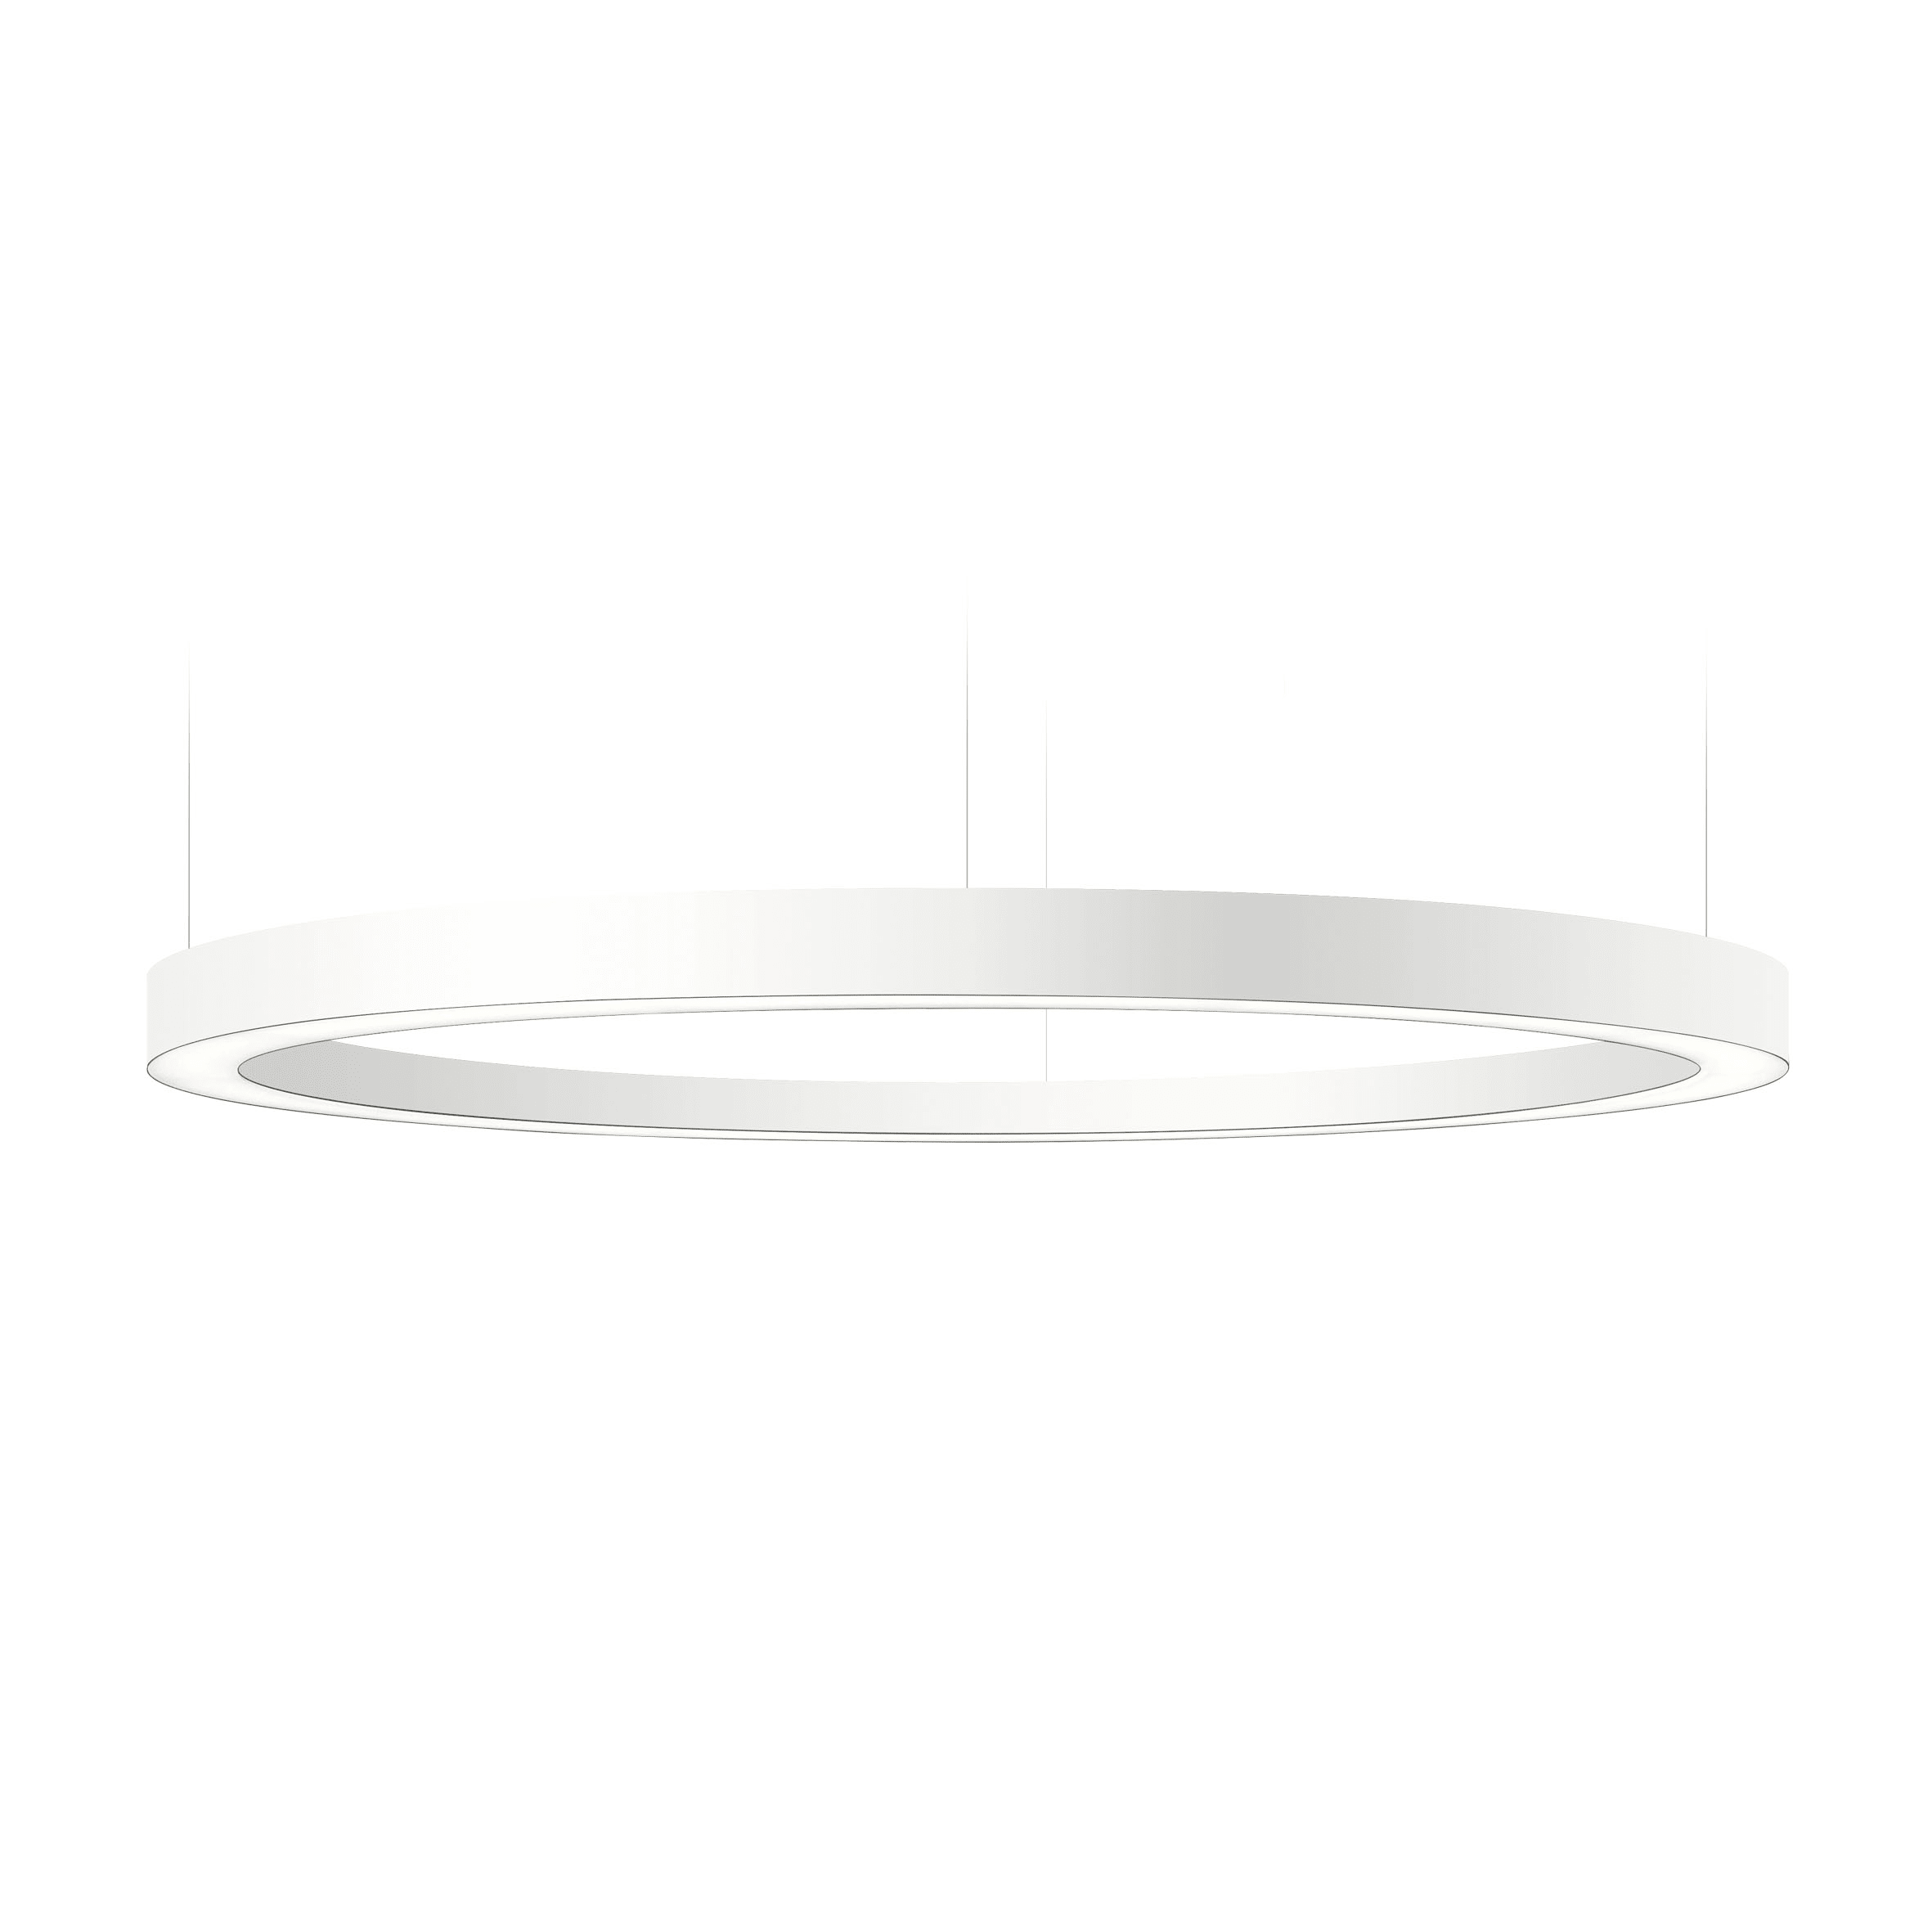 Planlicht - sinus suspension blanc 1530mm LED HO 3000K 105W 11289lm DALI